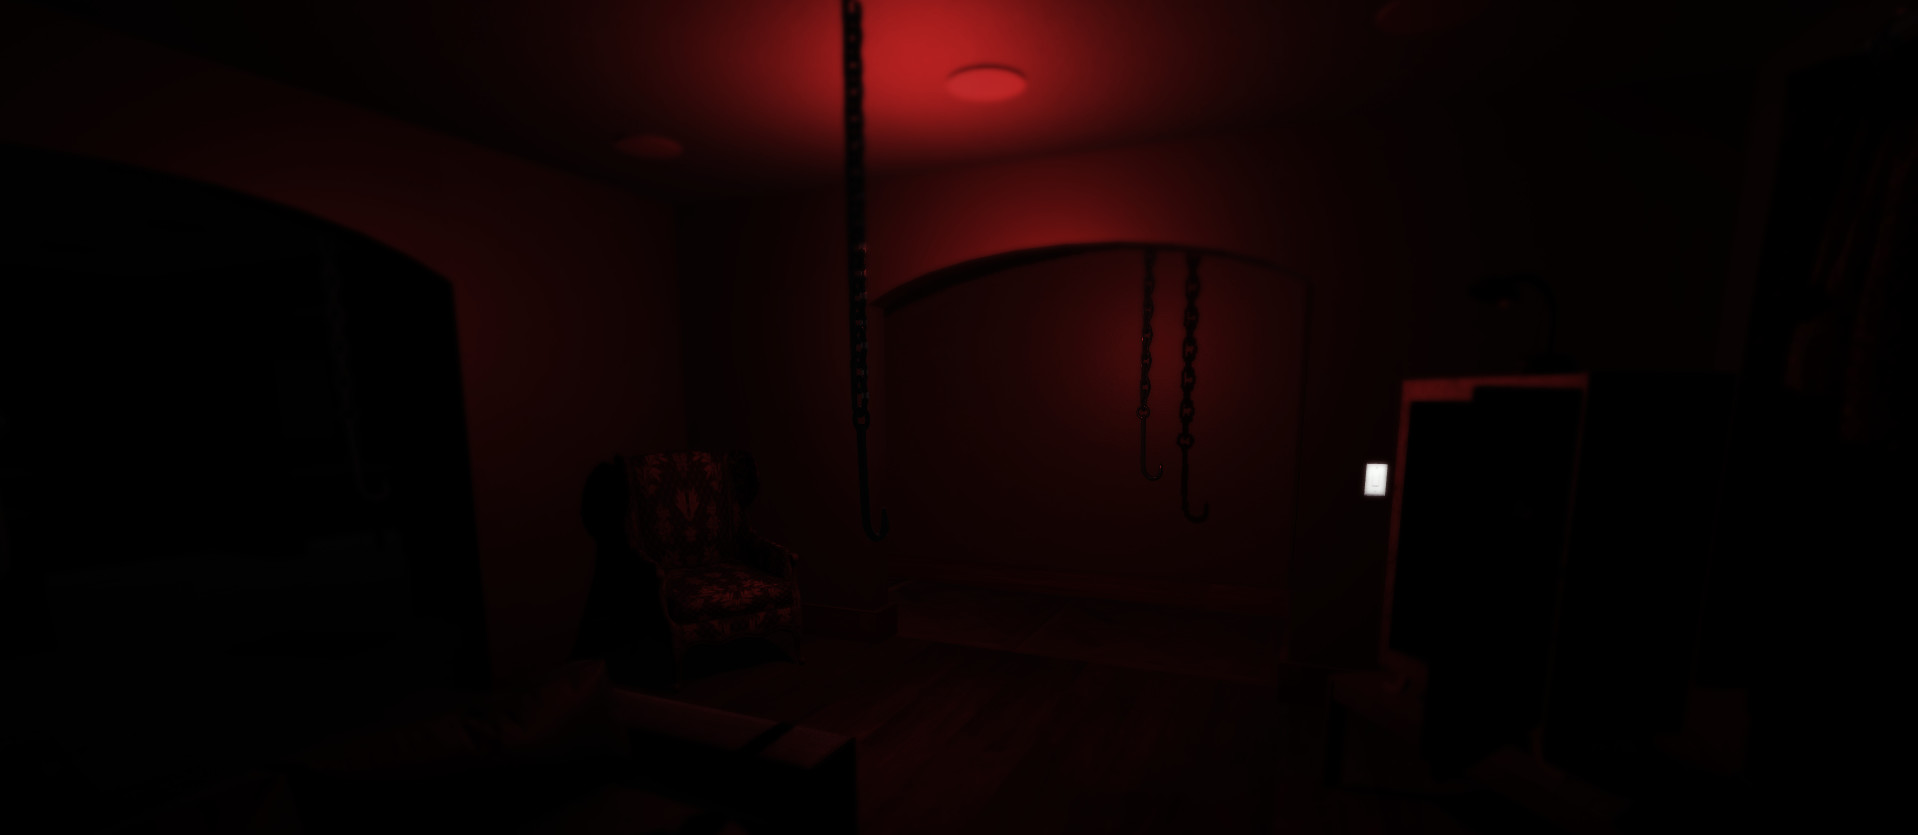 Minds Eyes - Free Psychological Indie Horror Game